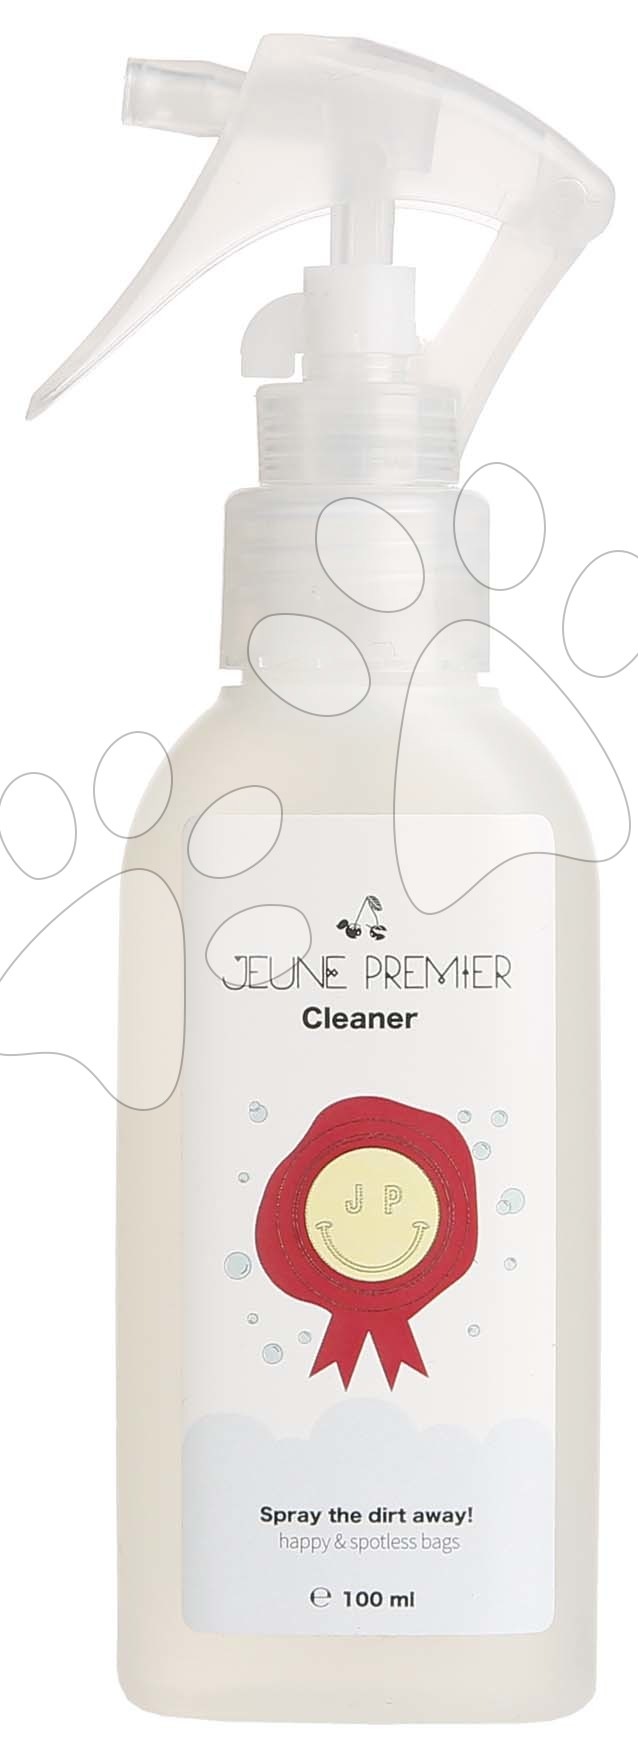 Čistiaci sprej na tašky Cleaner Jeune Premier 100 ml